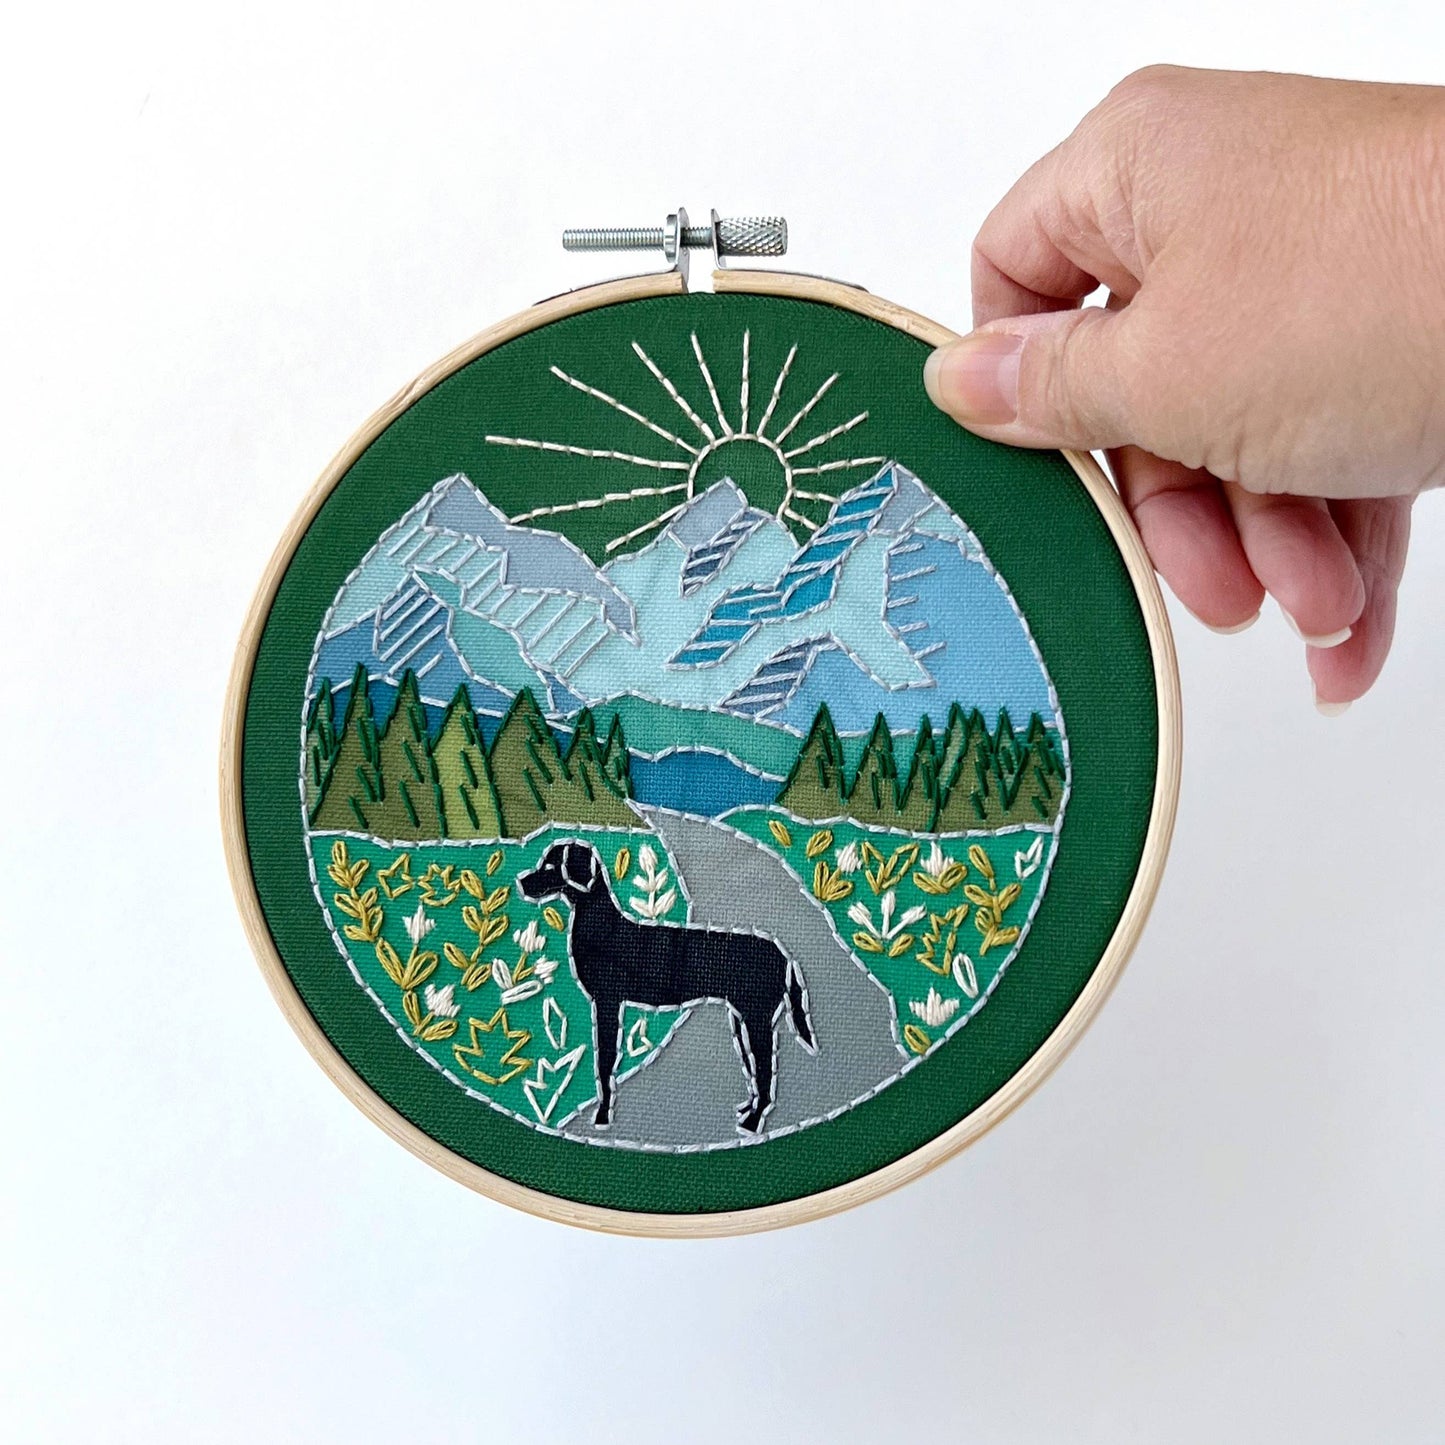 Trail Dog Embroidery Kit by Rikrack